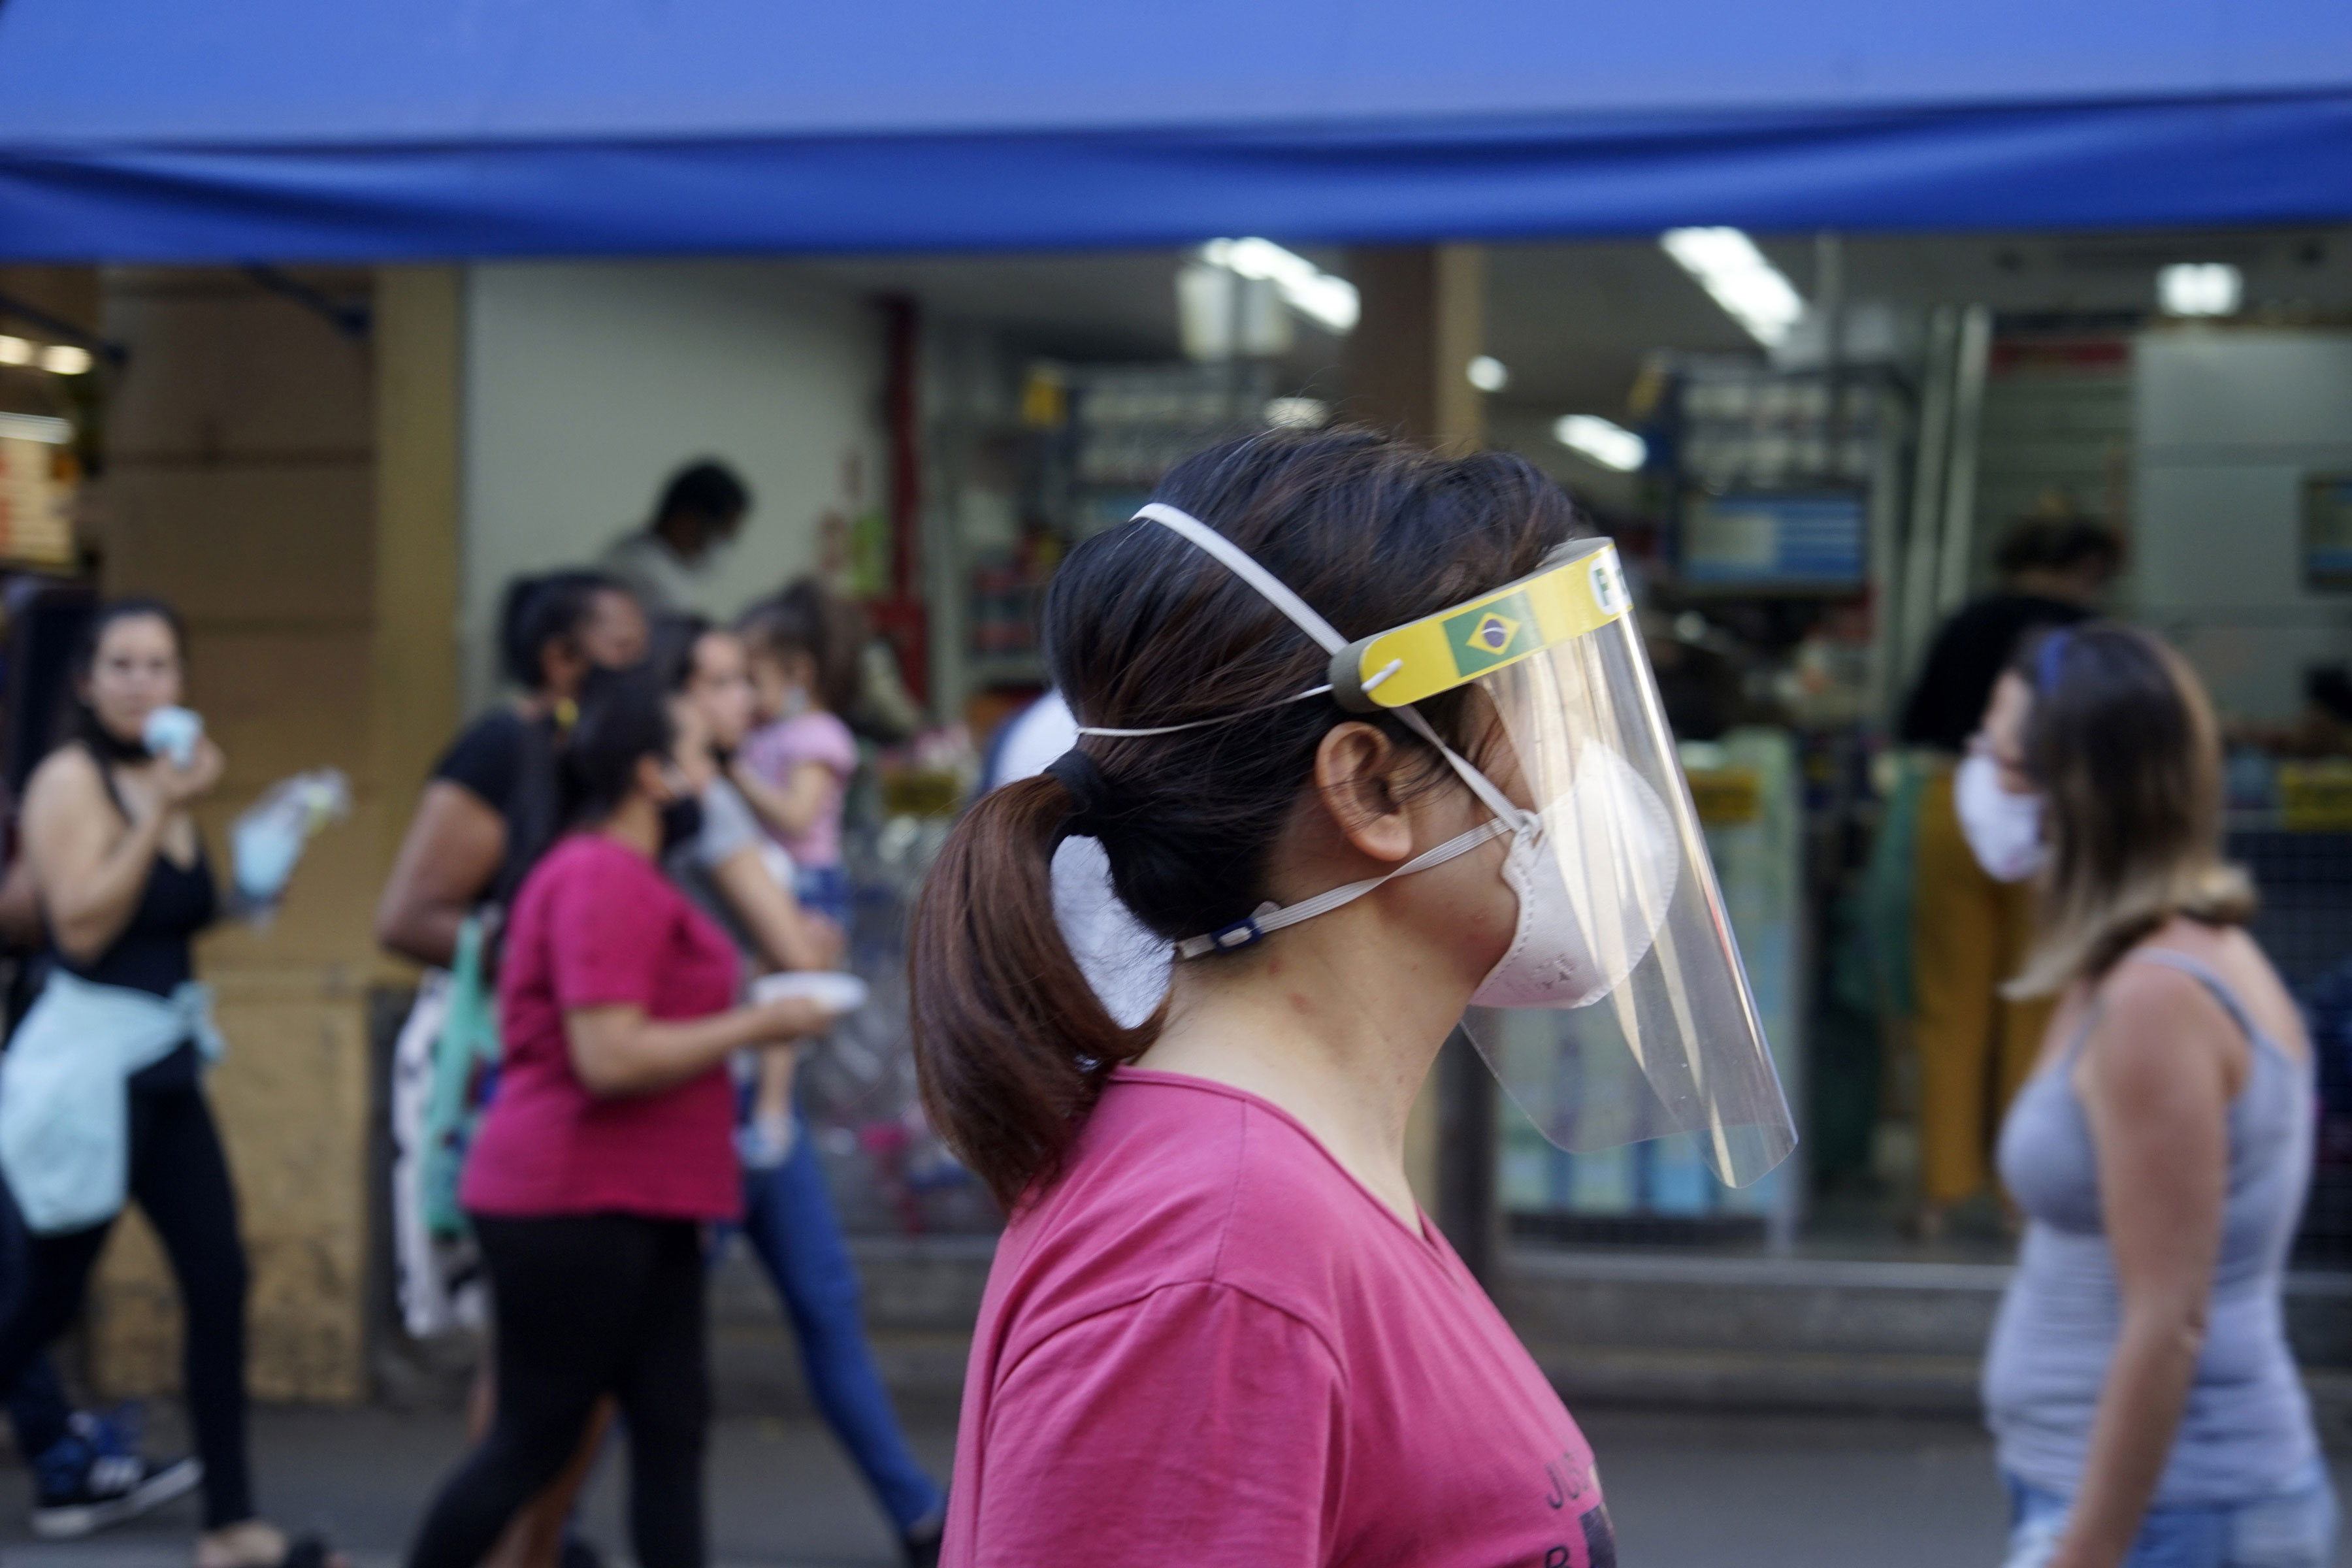 Pedestre usa máscara e face shield ao andar pela 25 de março